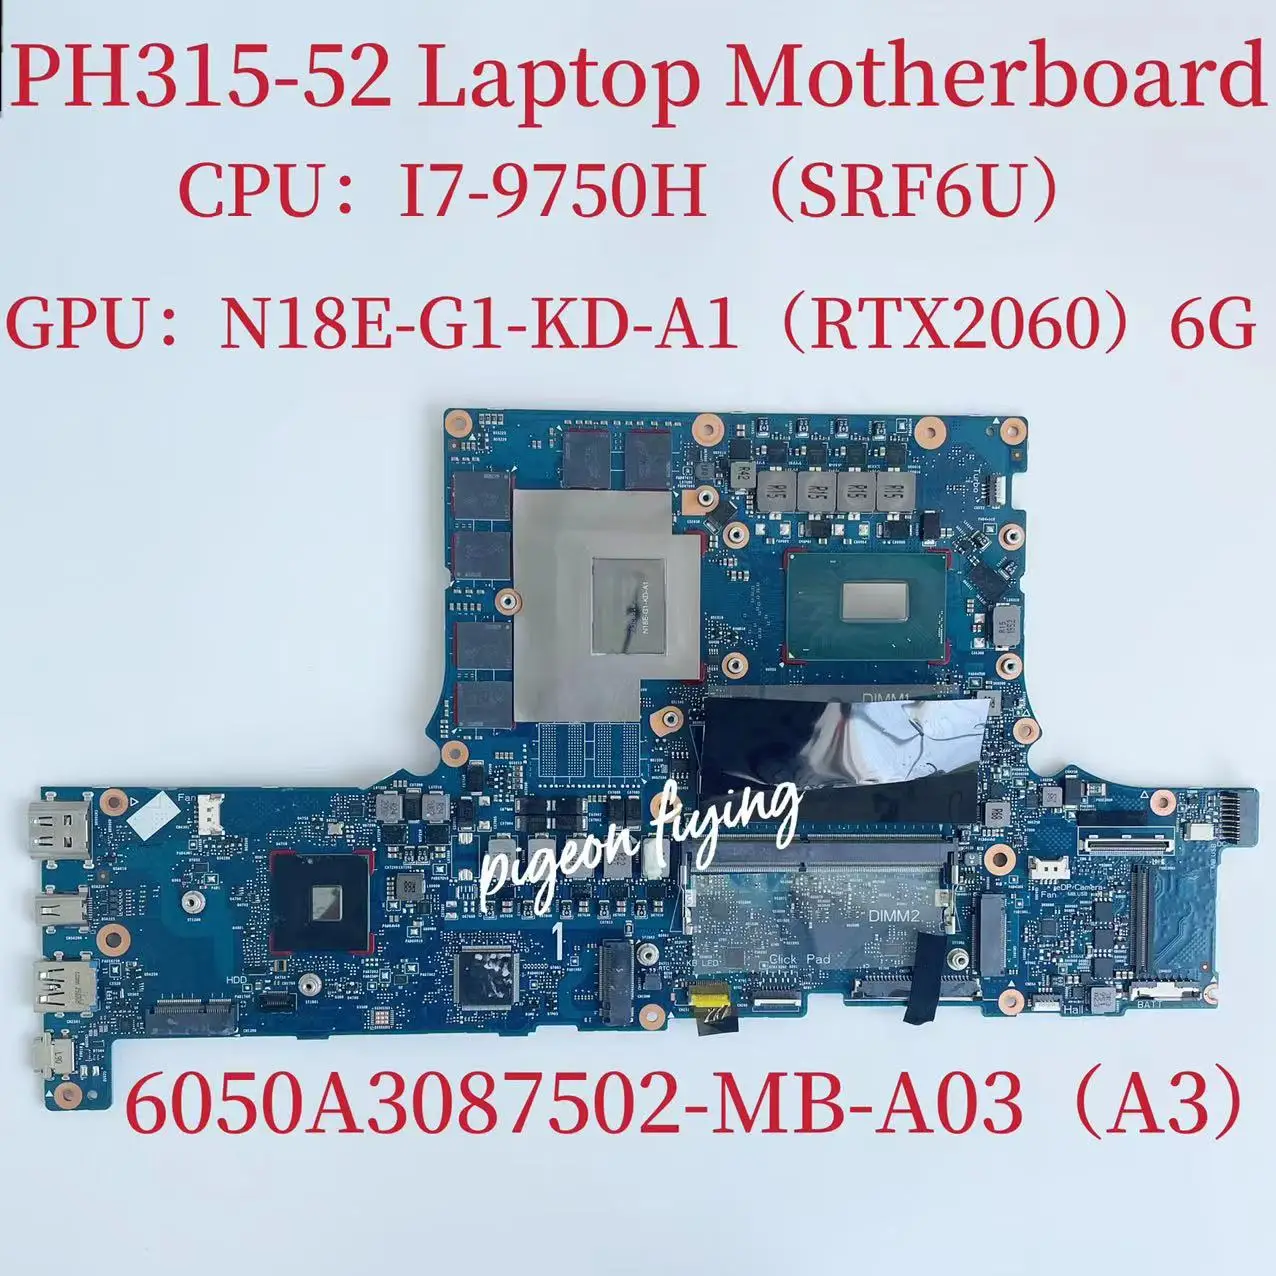 

6050A3087502-MB-A03 Mainboard for Acer Predator PH315-52 Laptop Motherboard CPU:I7-9750H GPU:N18E-G1-KD-A1 RTX2060 6G Test OK